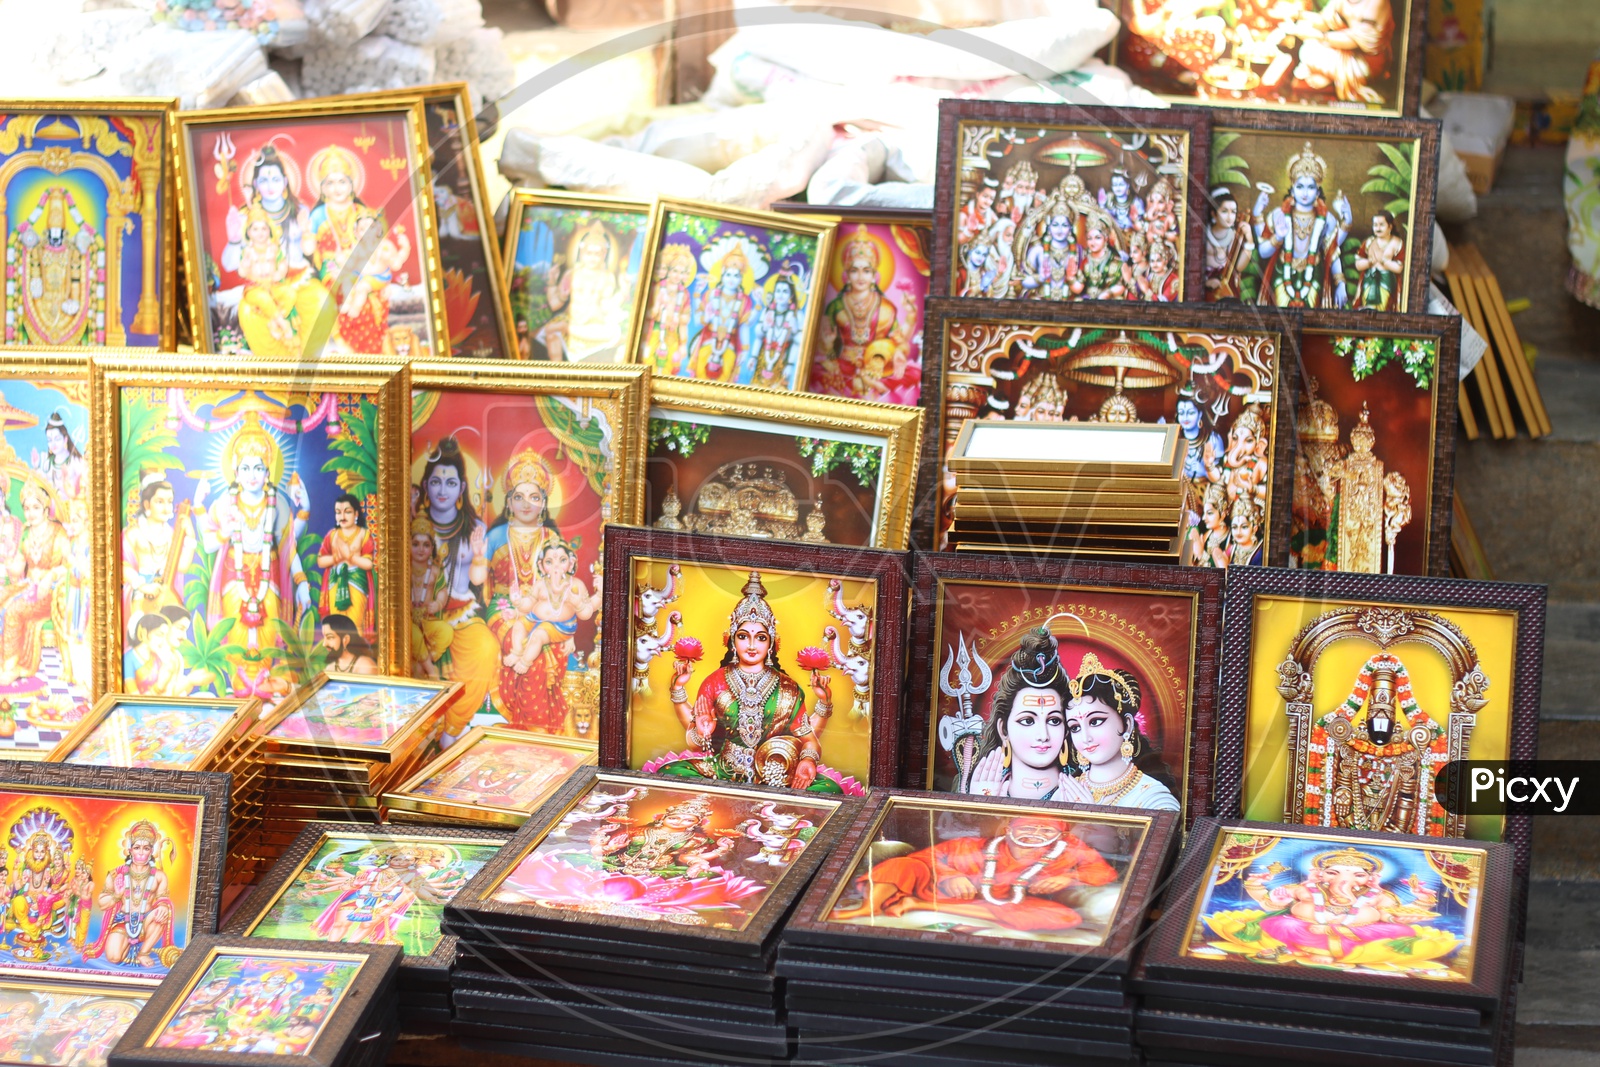 Indian Gods frames on the Street for sale